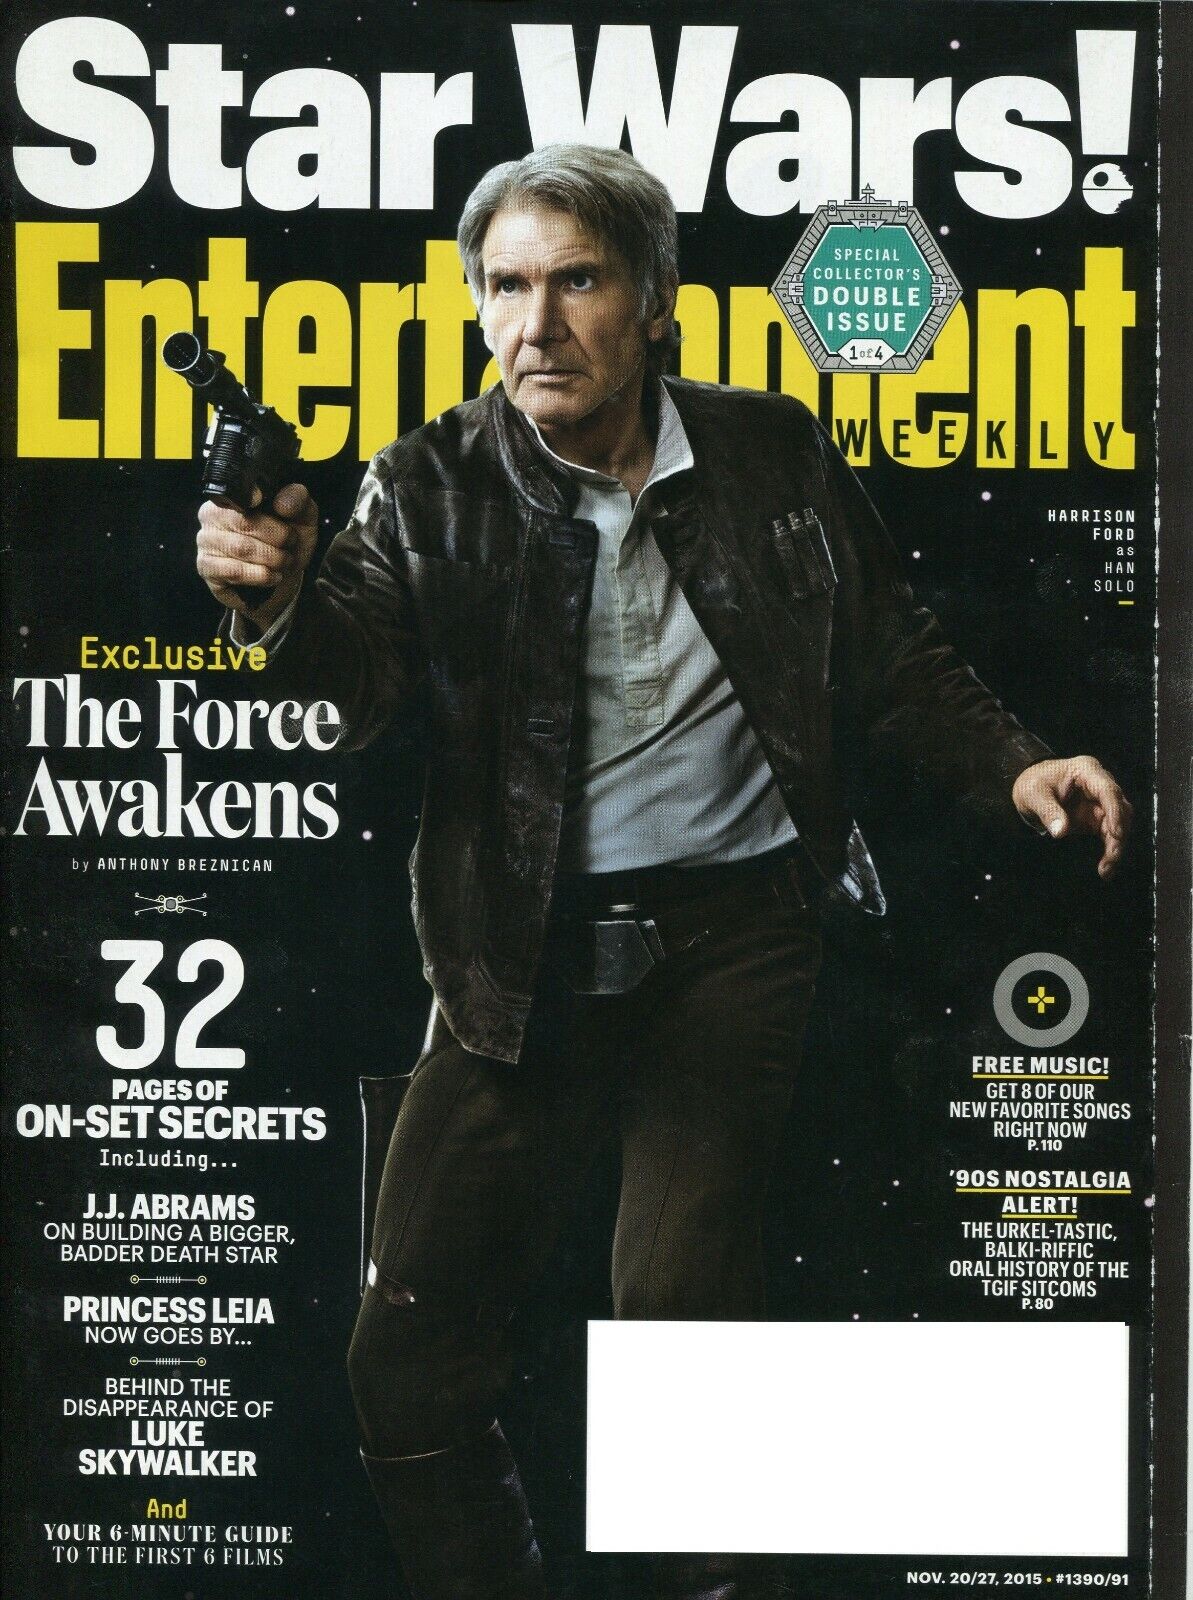 Entertainment Weekly Magazine November 20/27, 2015 - Harrison Ford, Star Wars